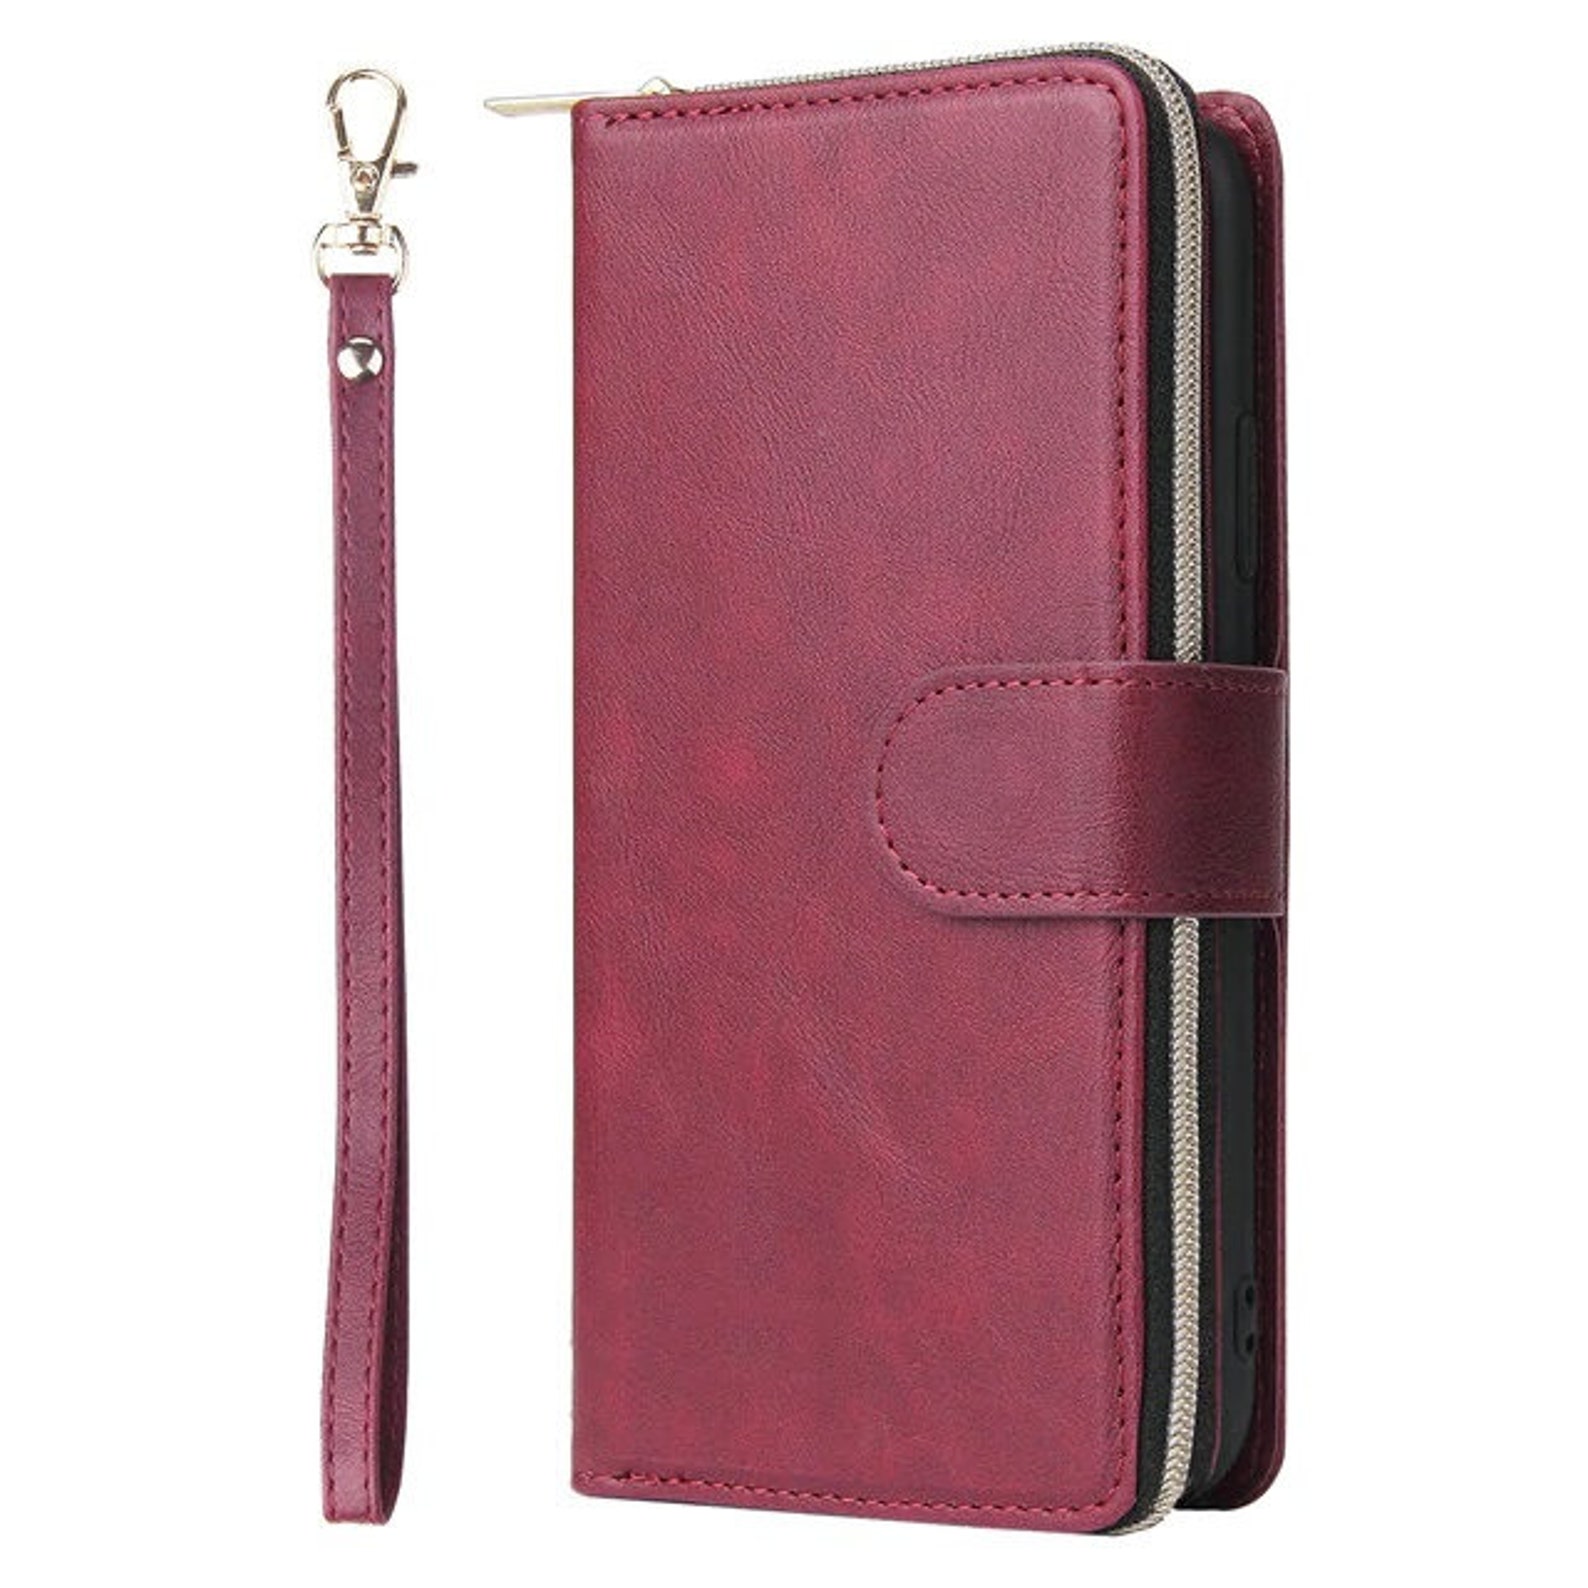 Samsung Wallet Case Premium Leather Zipper Case Wallet Card | Etsy